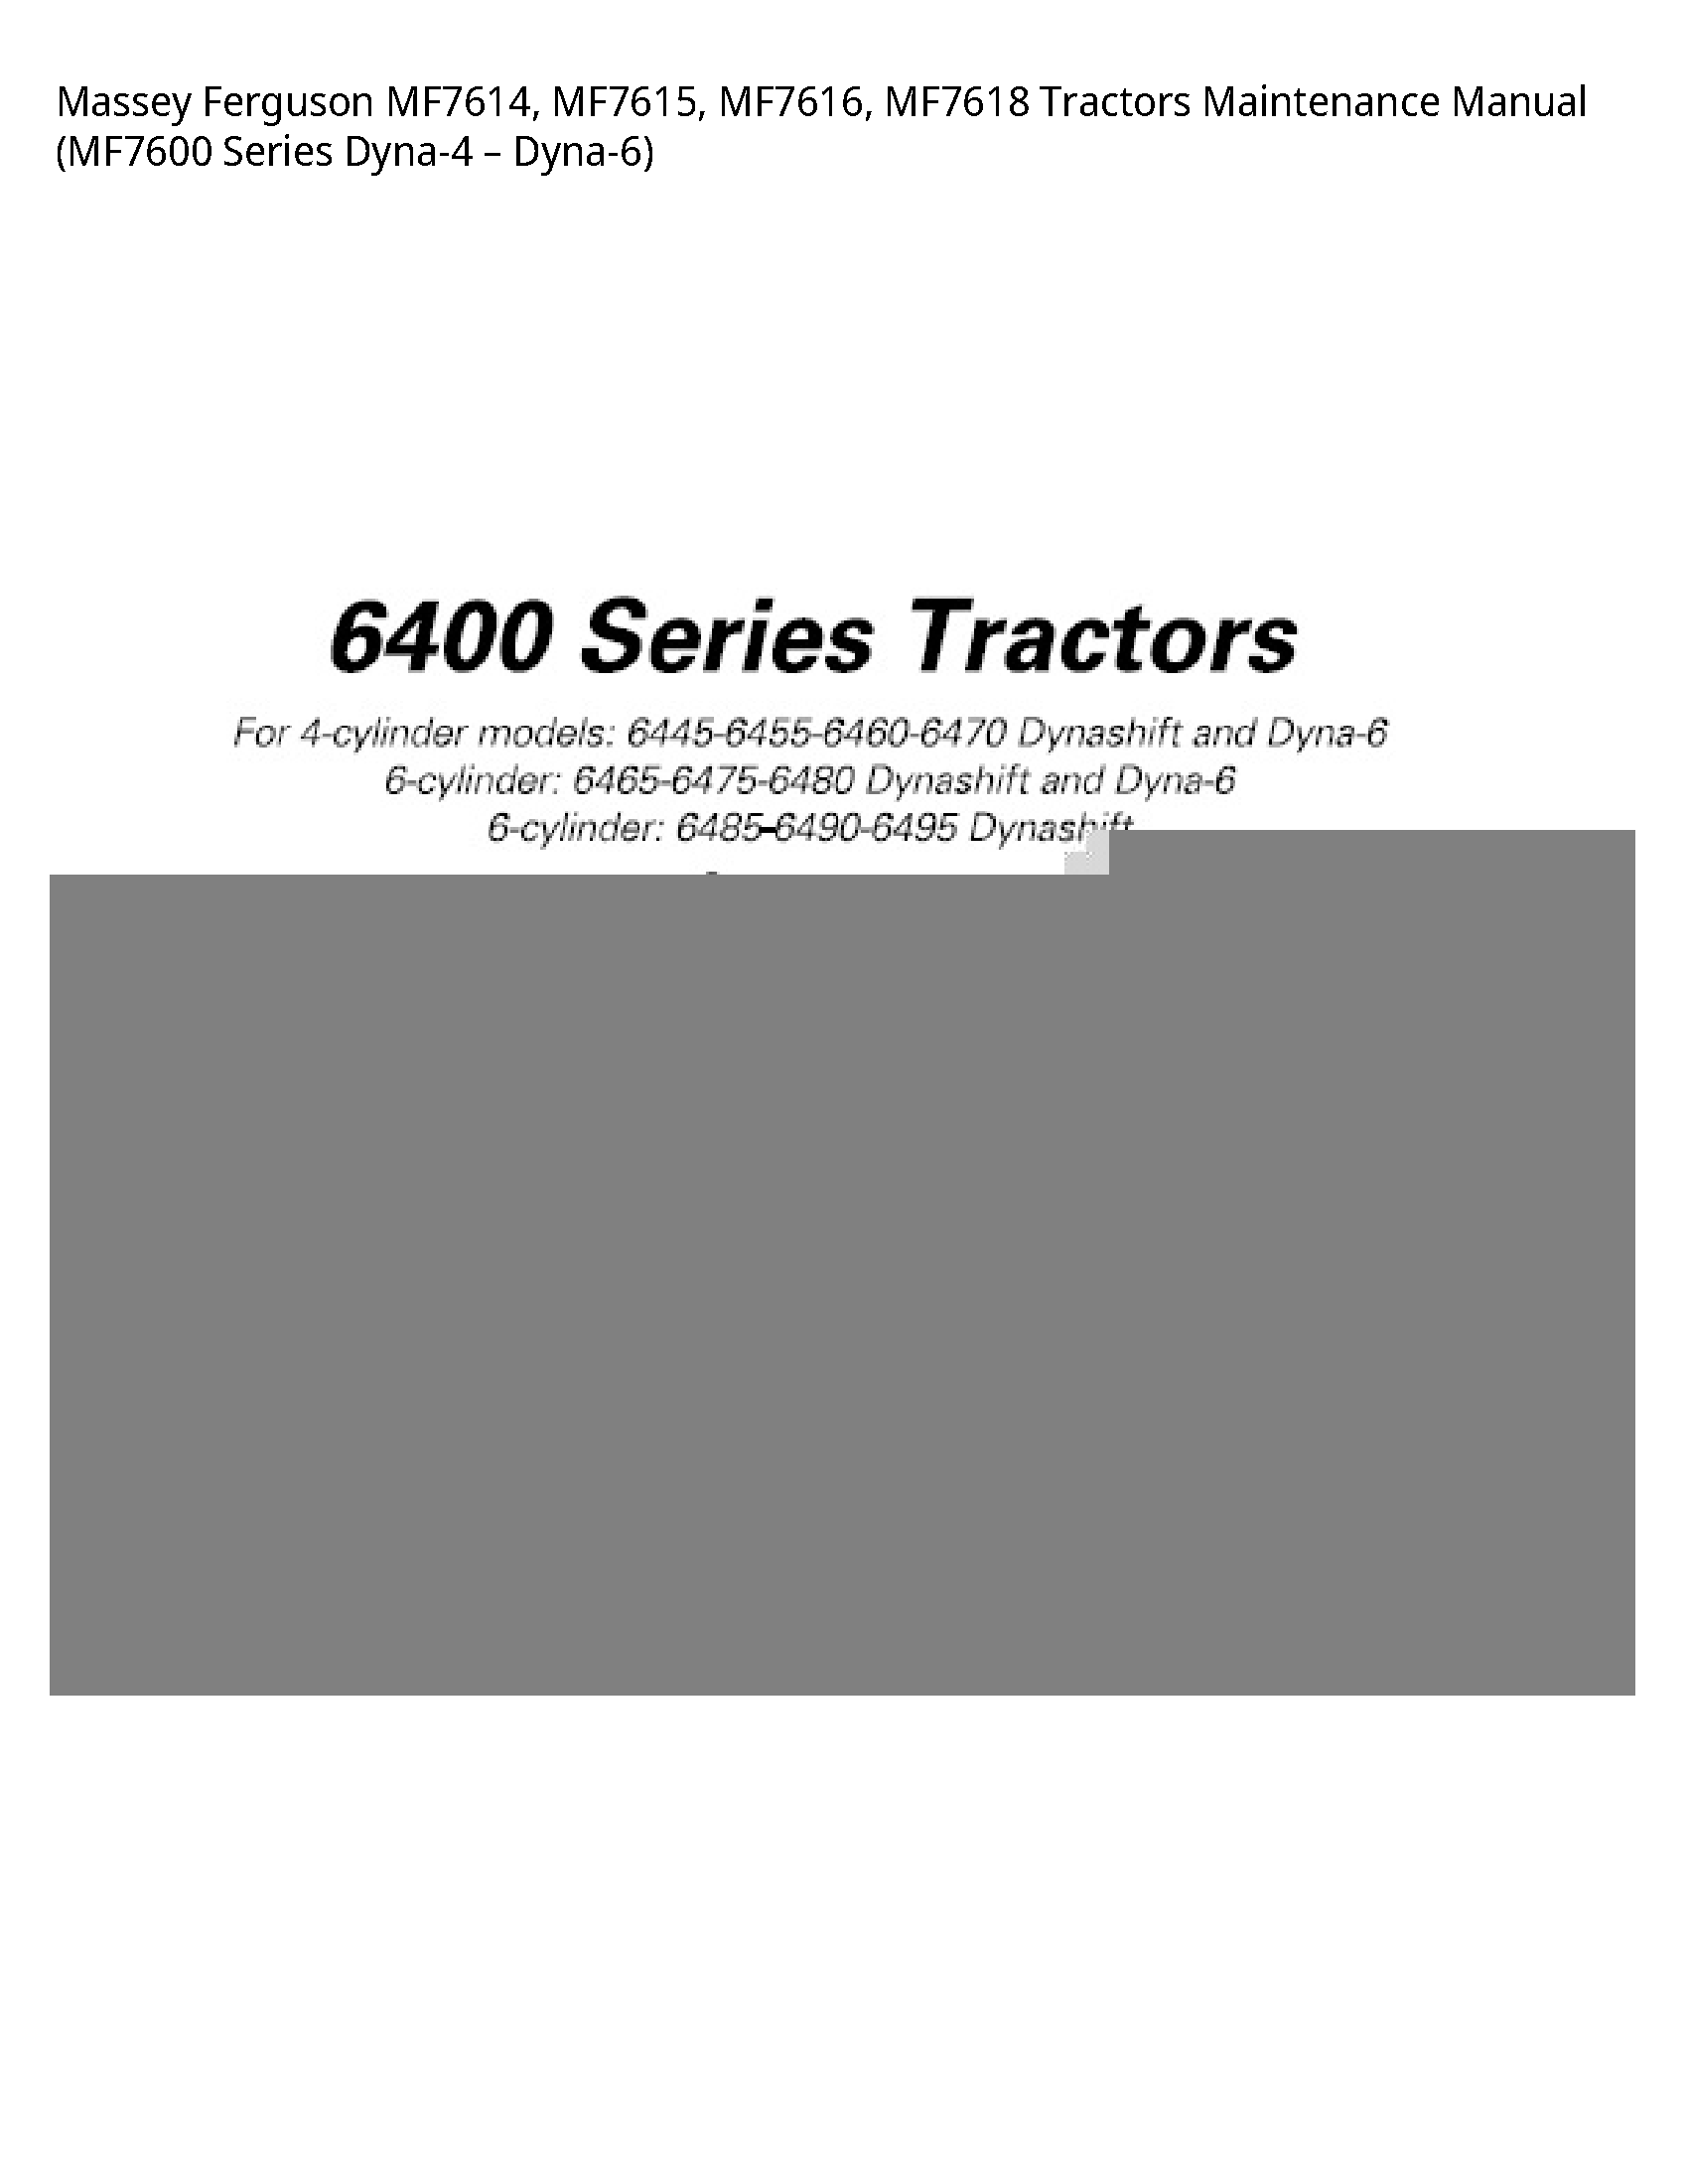 Massey Ferguson MF7614 Tractors Maintenance manual